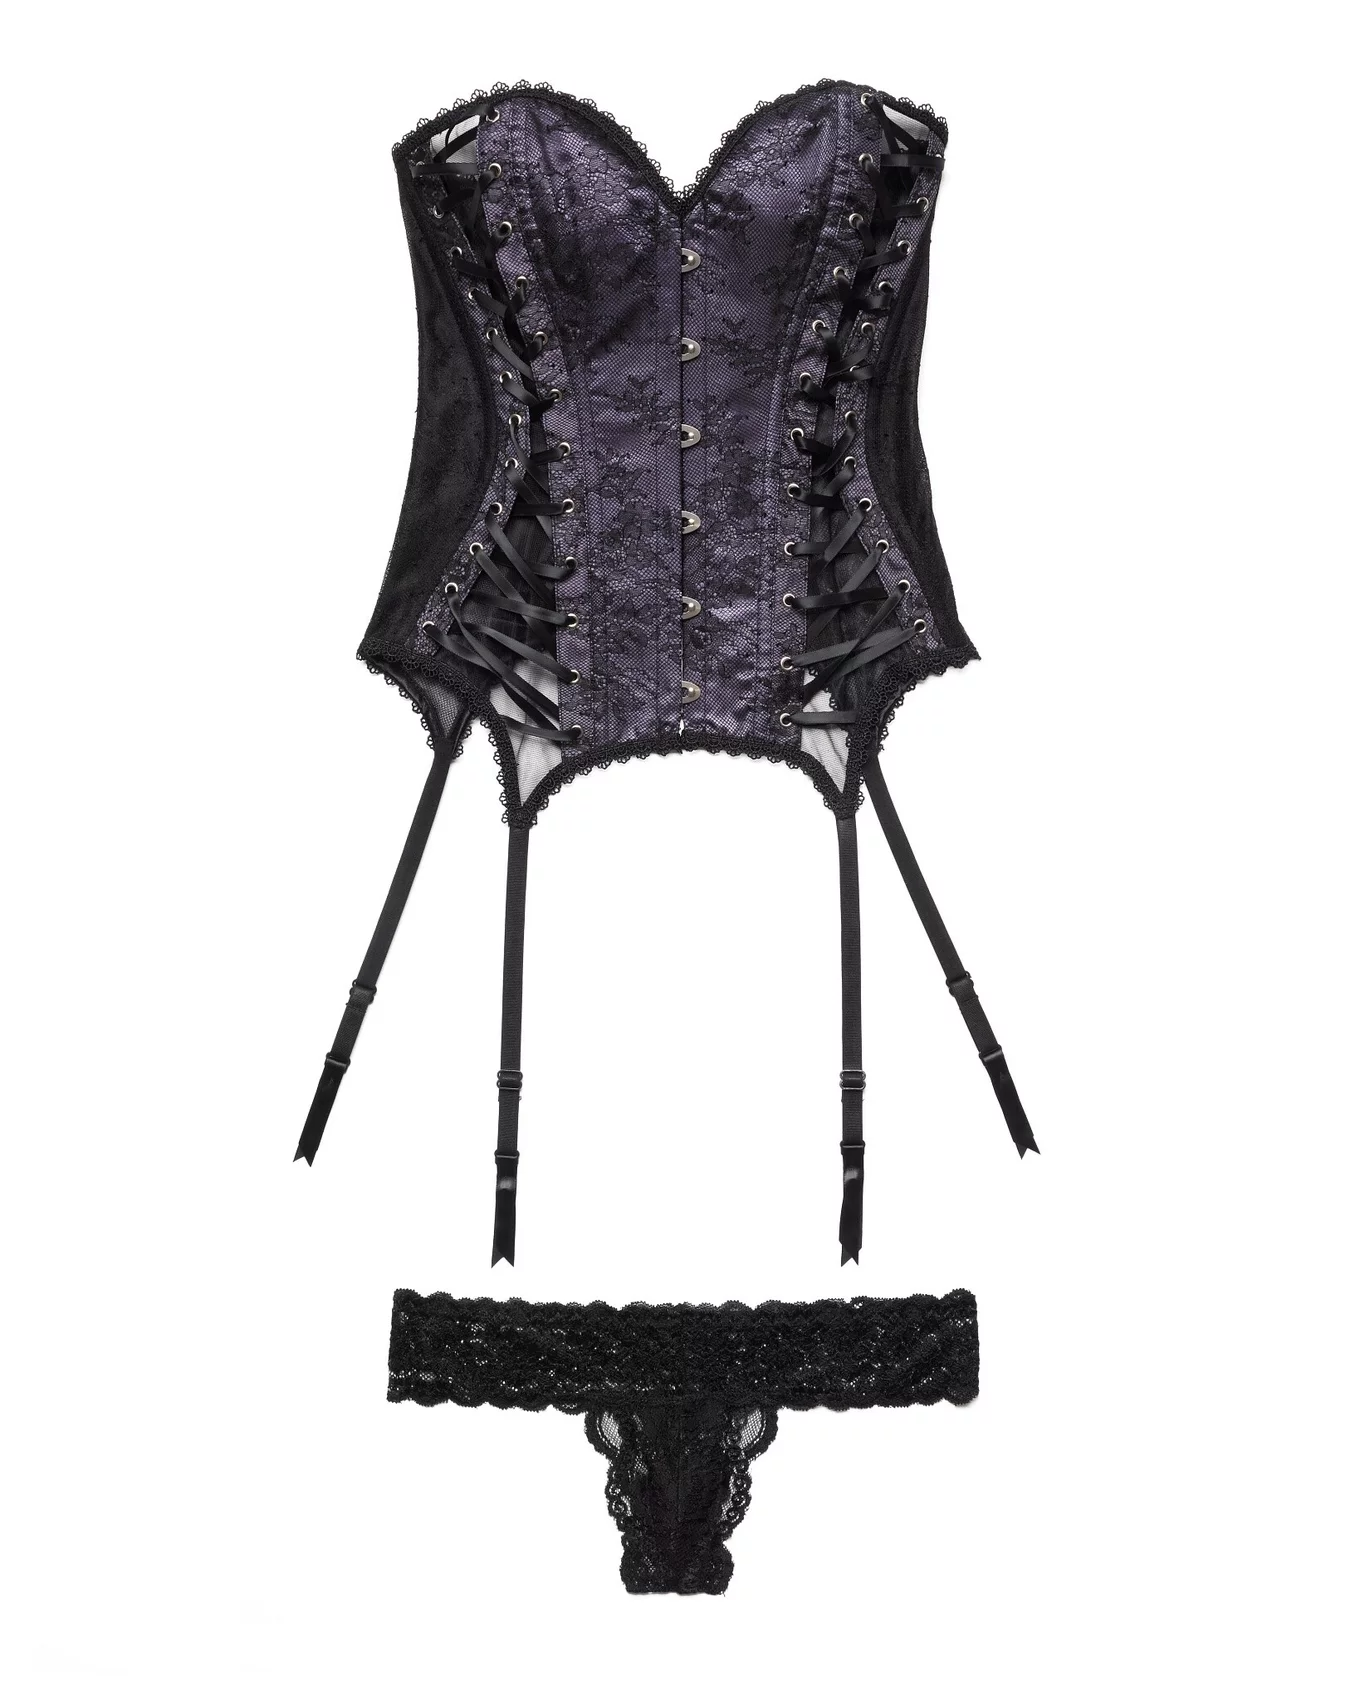 Adore Me - Our covetable Axelle corset doubles as daywear. ✨ Make